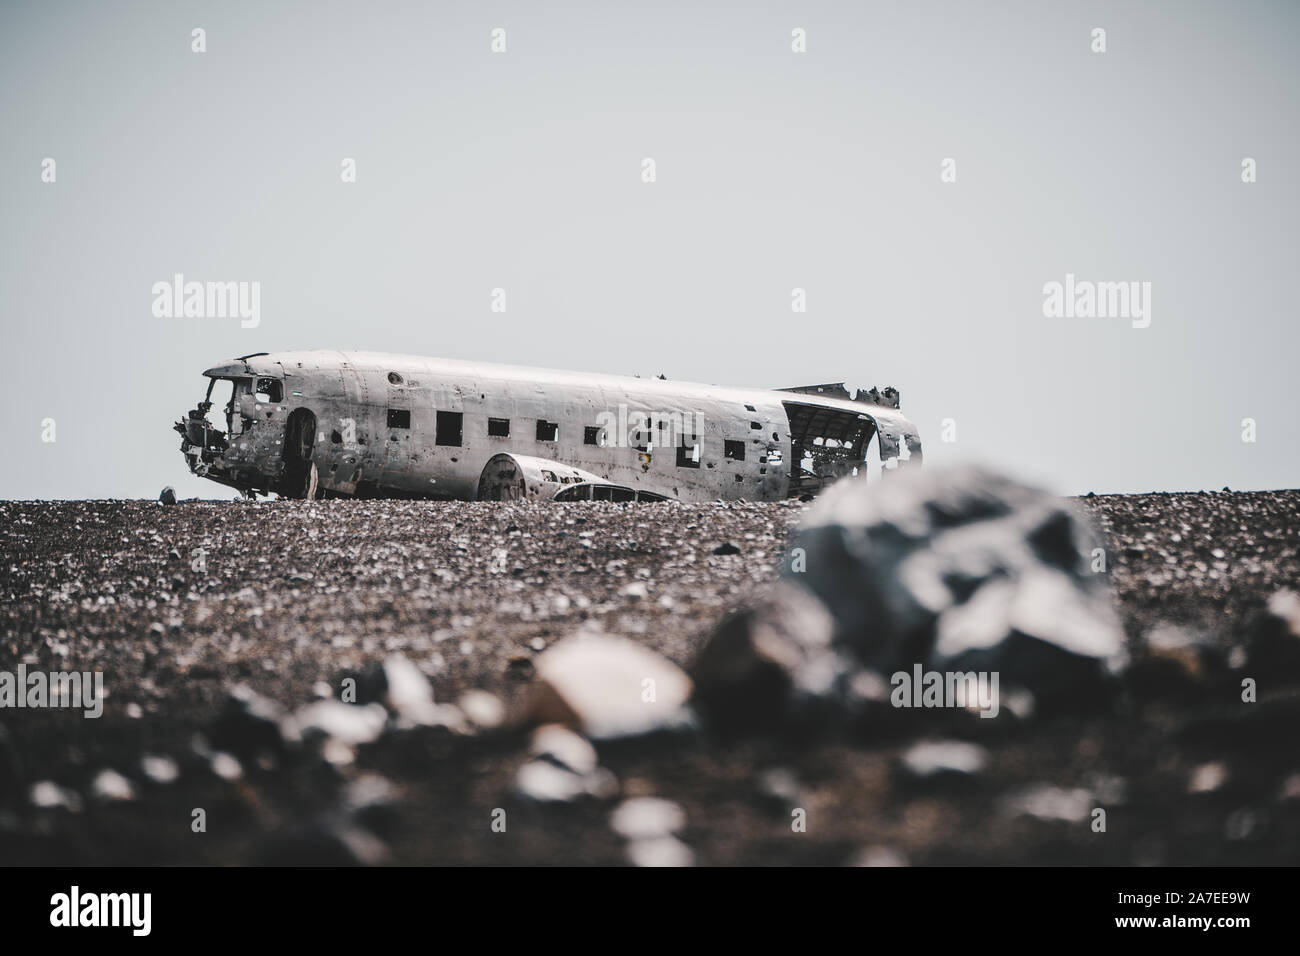 Iceland Lonely DC-3 Plane Wreckage Aviation Landscape Stock Photo